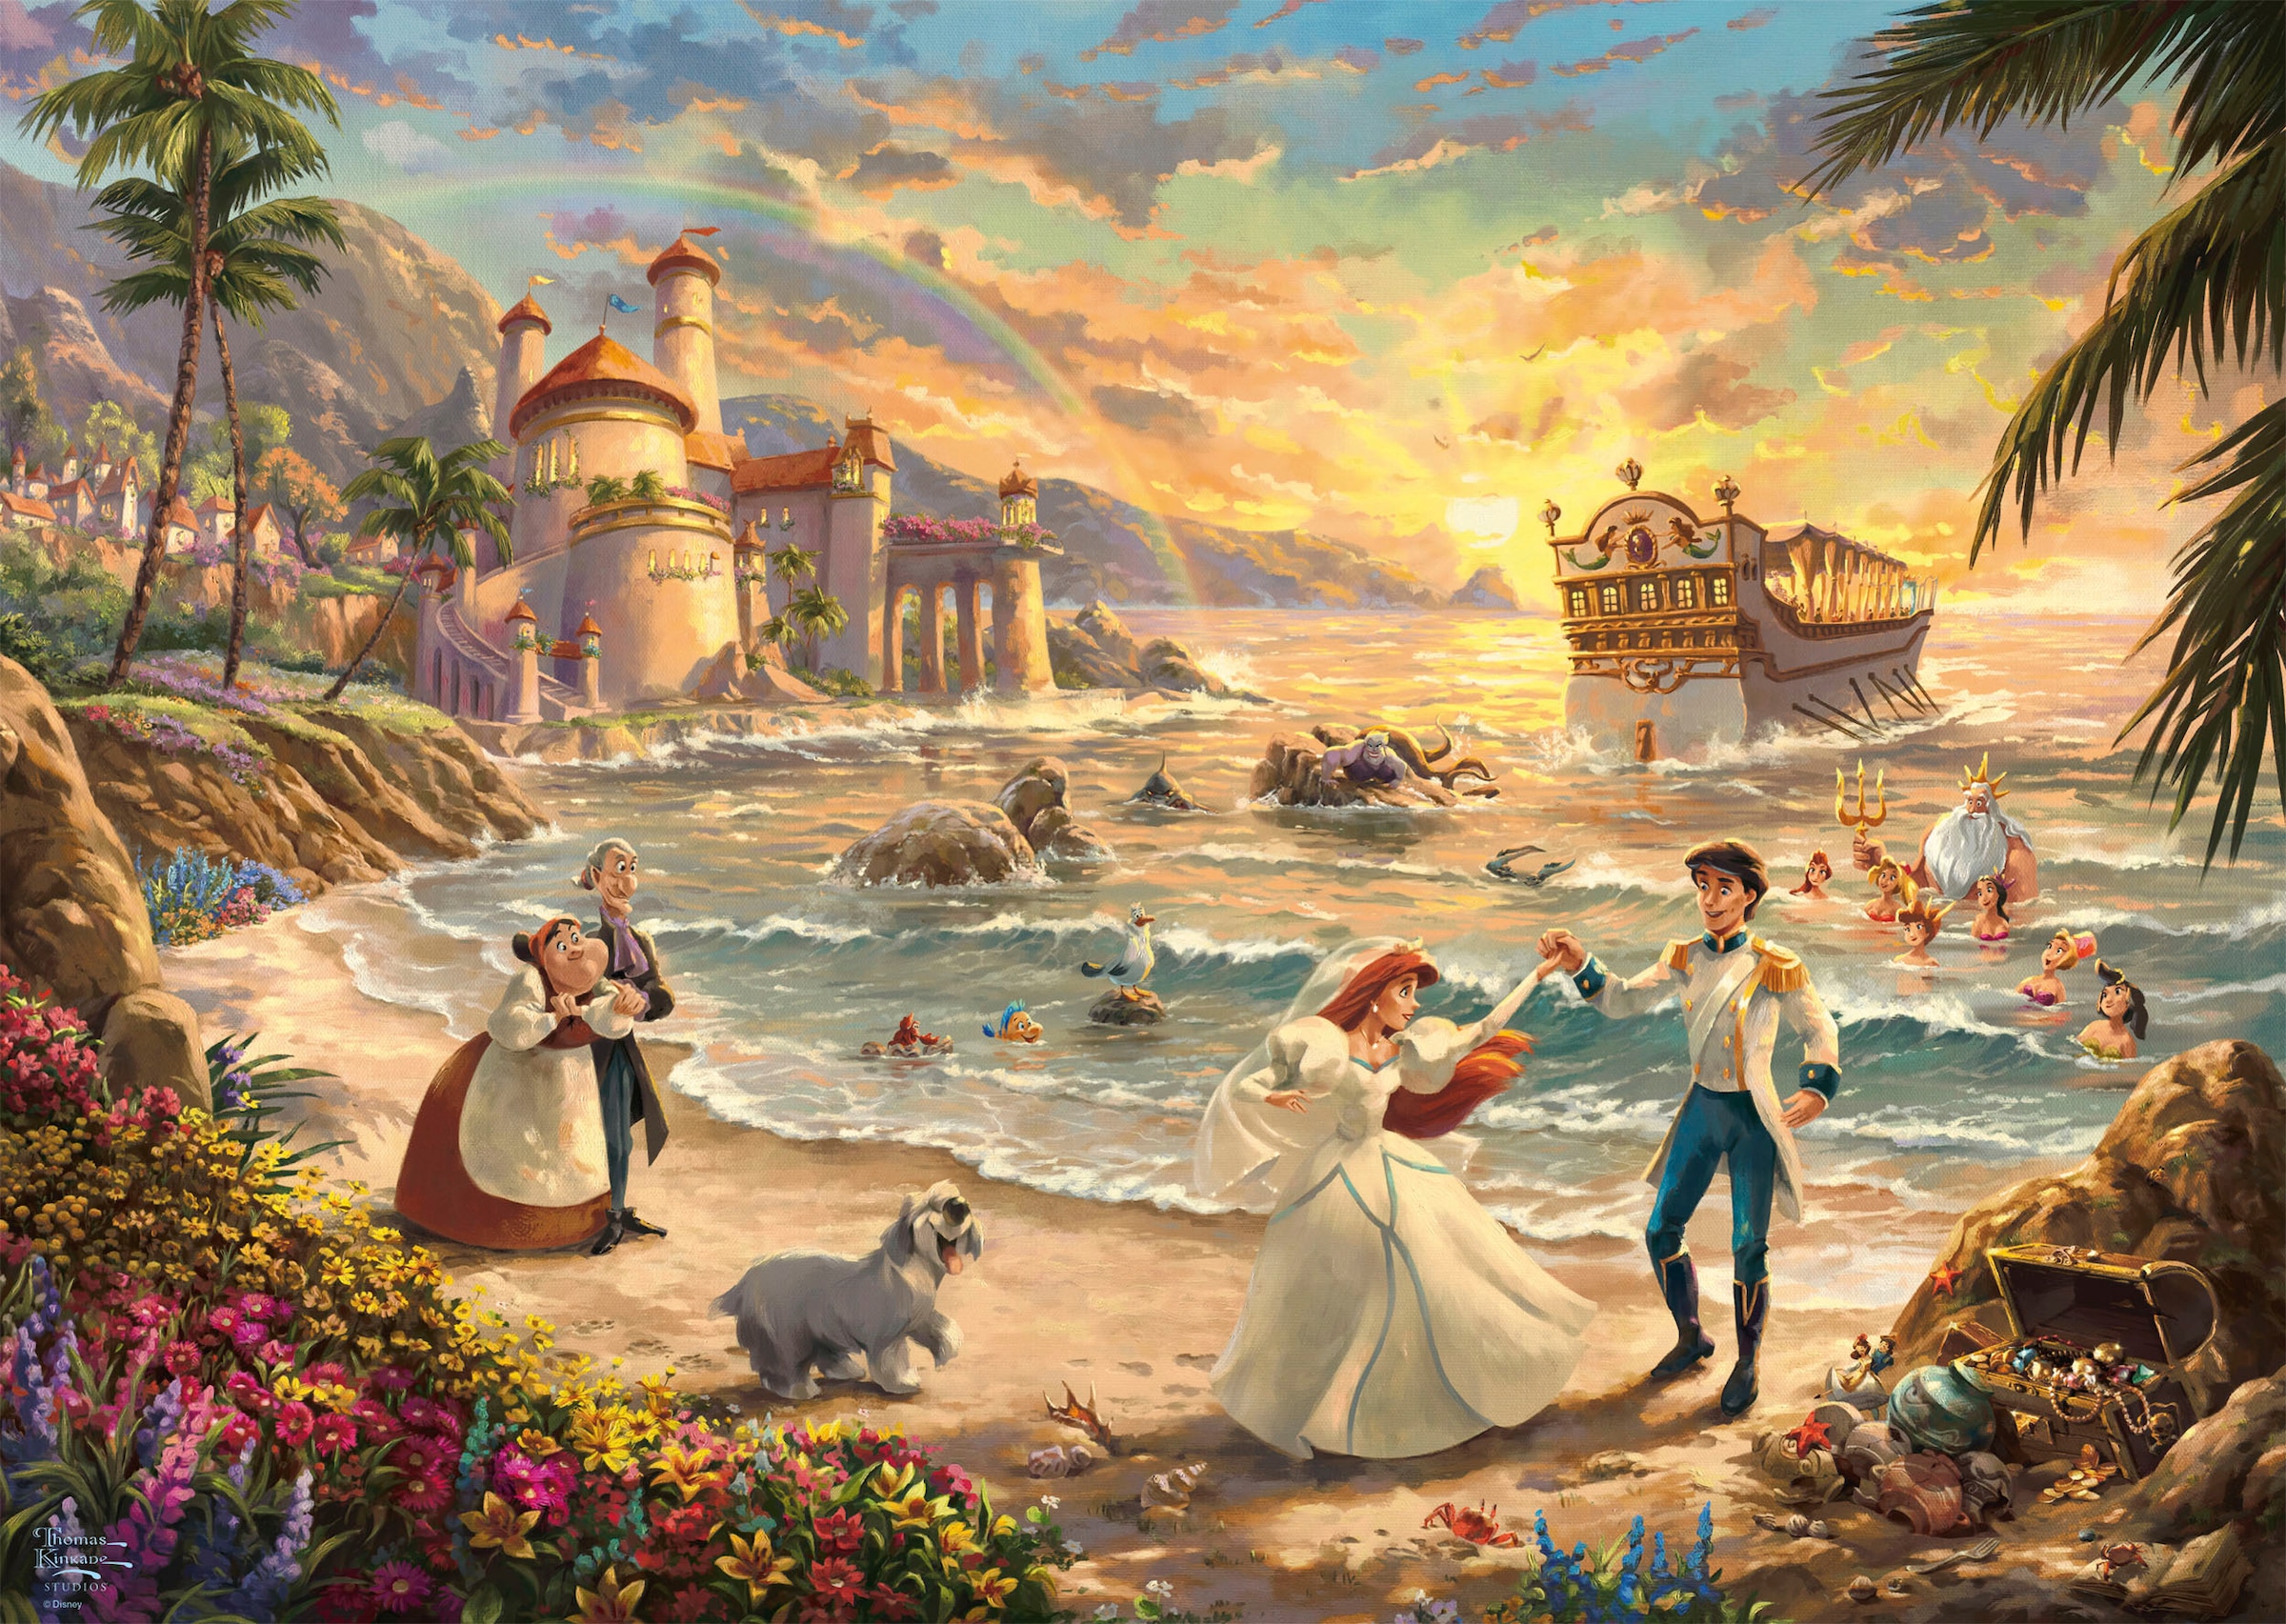 Schmidt Spiele Puzzle »Disney, The Little Mermaid Celebration of Love von Thomas Kinkade«